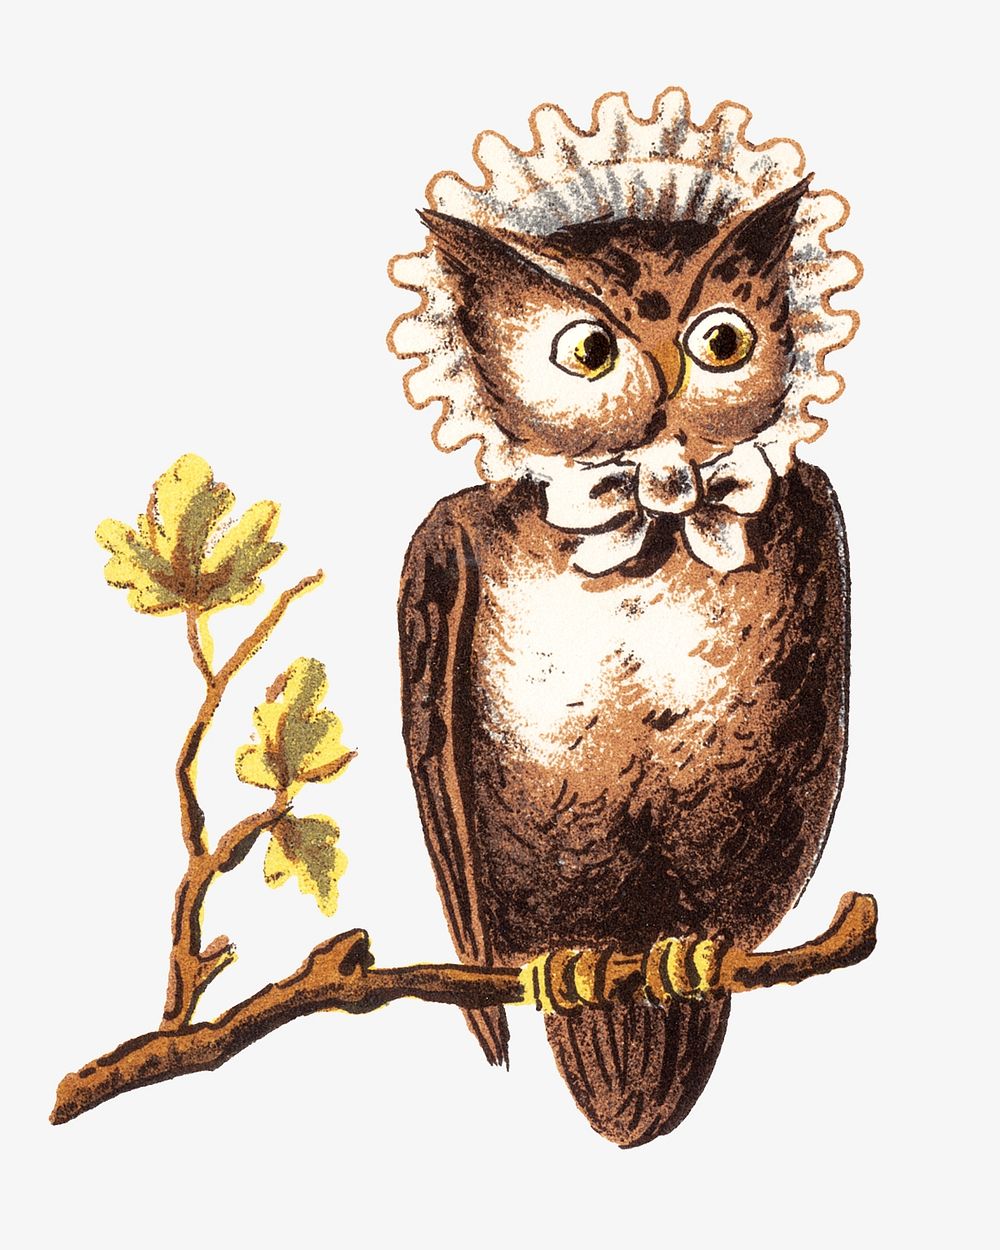 Vintage owl bird, animal illustration. Remixed by rawpixel.